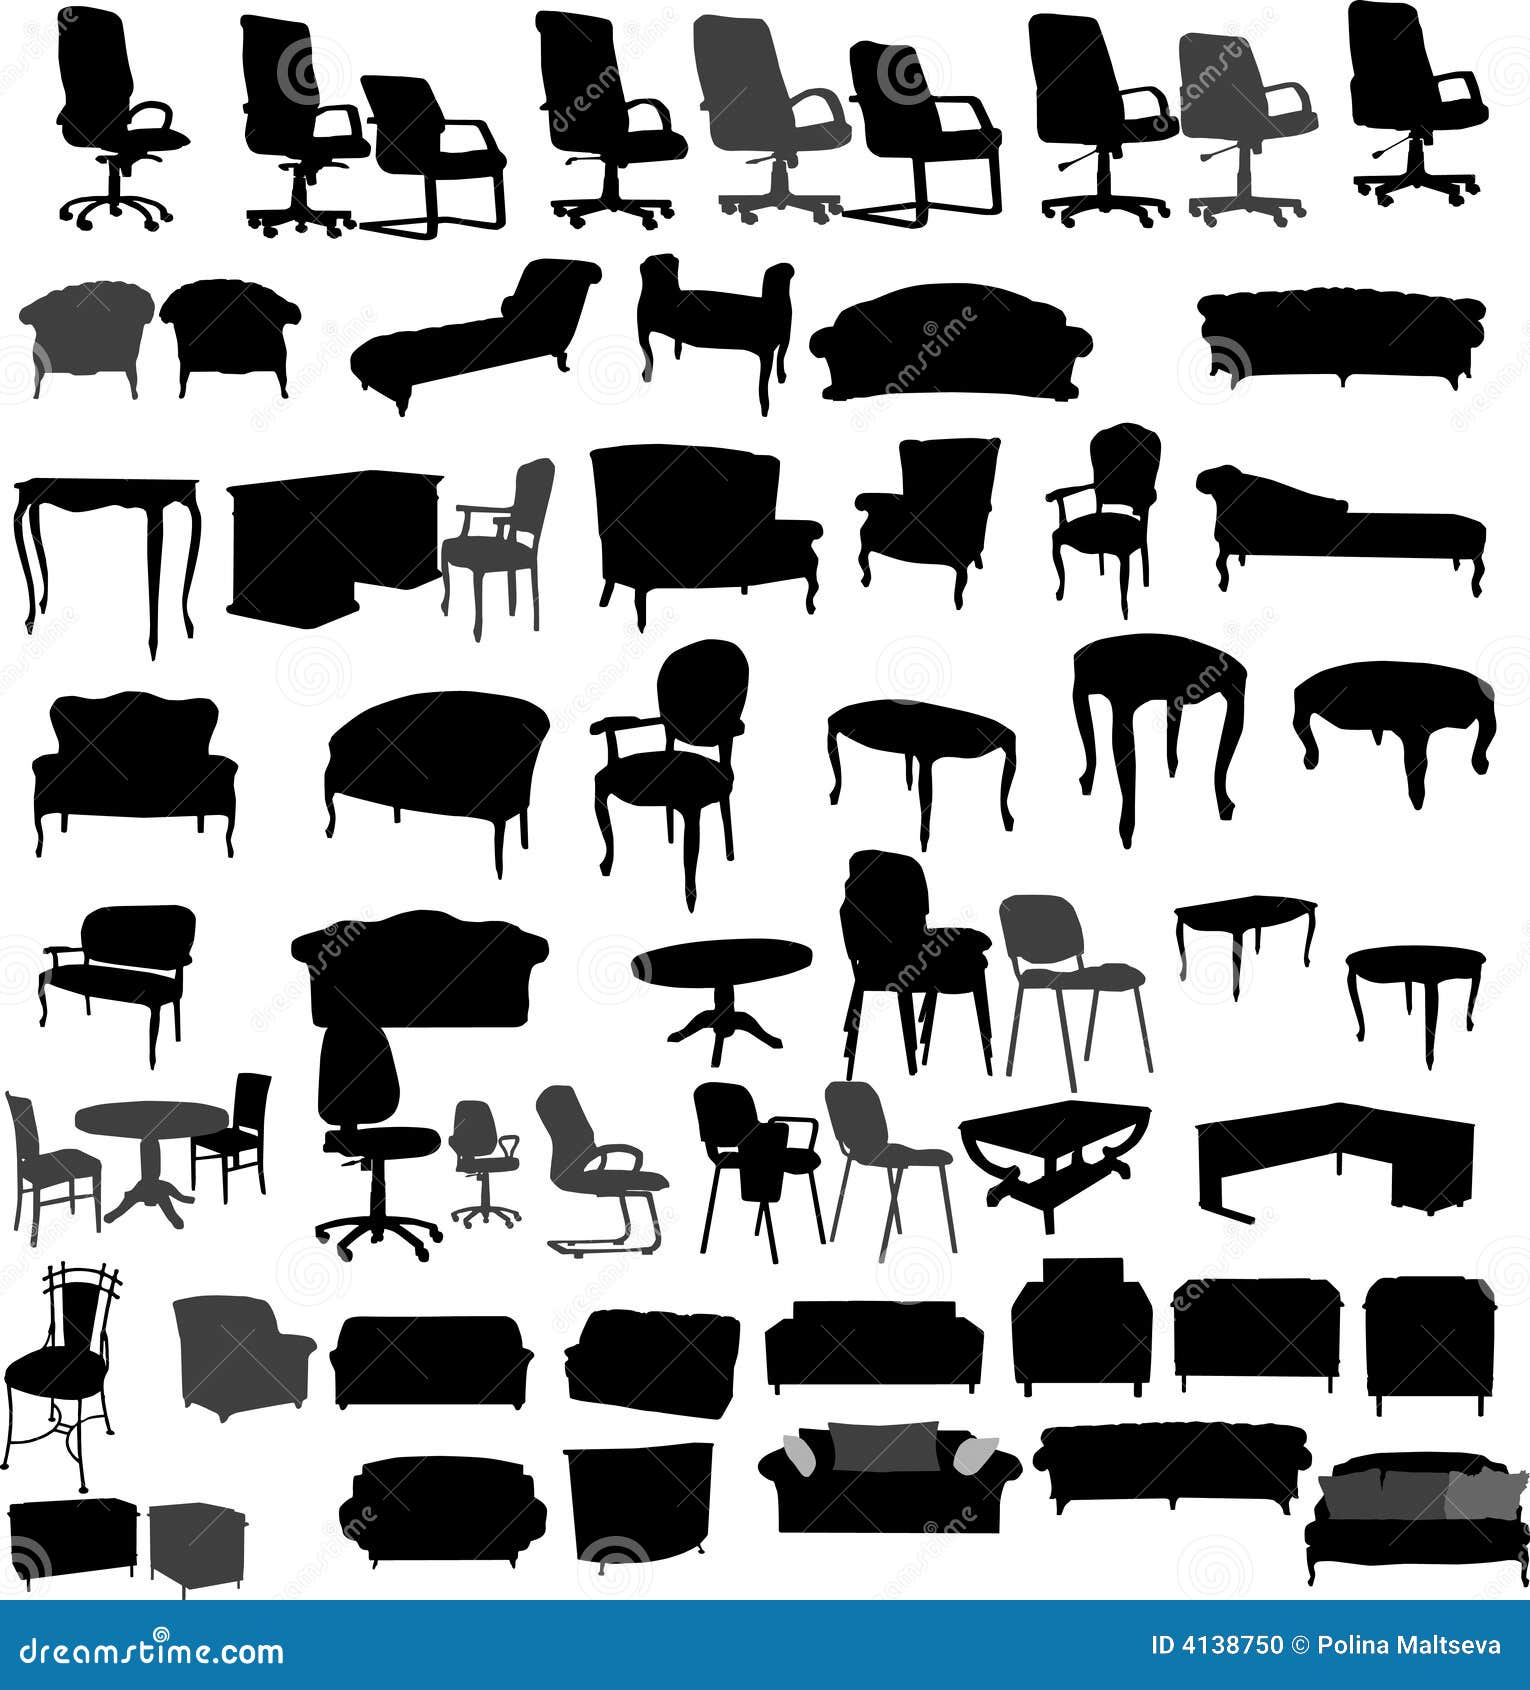 furniture silhouette clip art - photo #49